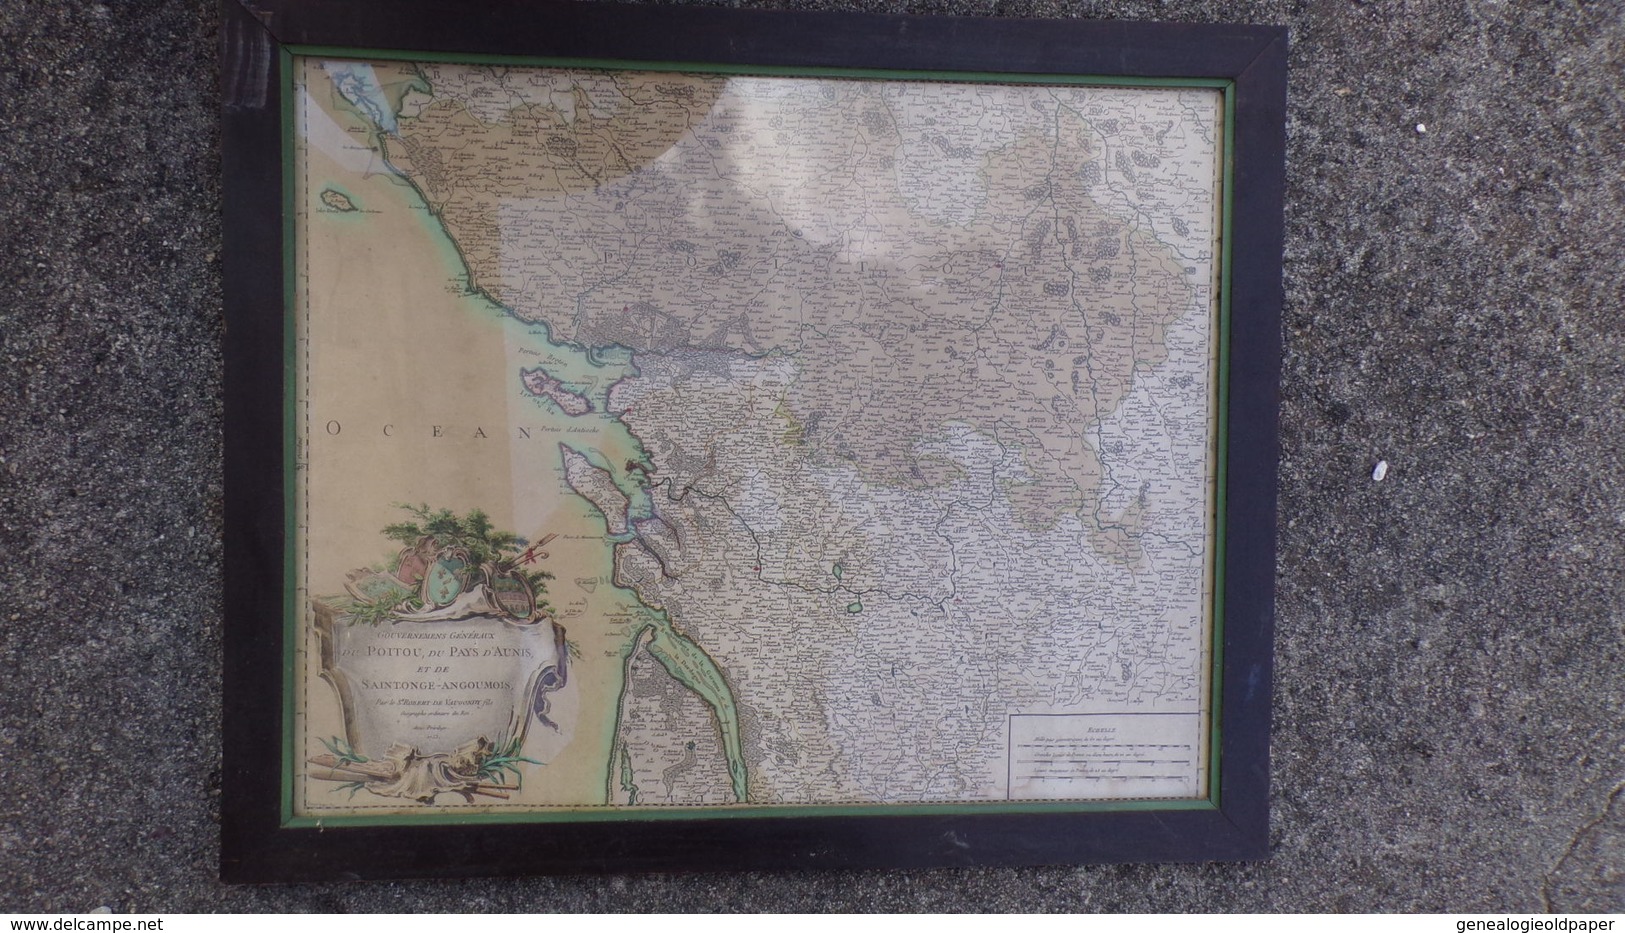 17-16-33-85-87-RARE CARTE GOUVERNEMENT GENERAUX DU POITOU- AUNIS-SAINTONGE-ANGOUMOIS-VAUGONDY 1753-ROYAN-ILE RE-OLERON- - Geographical Maps